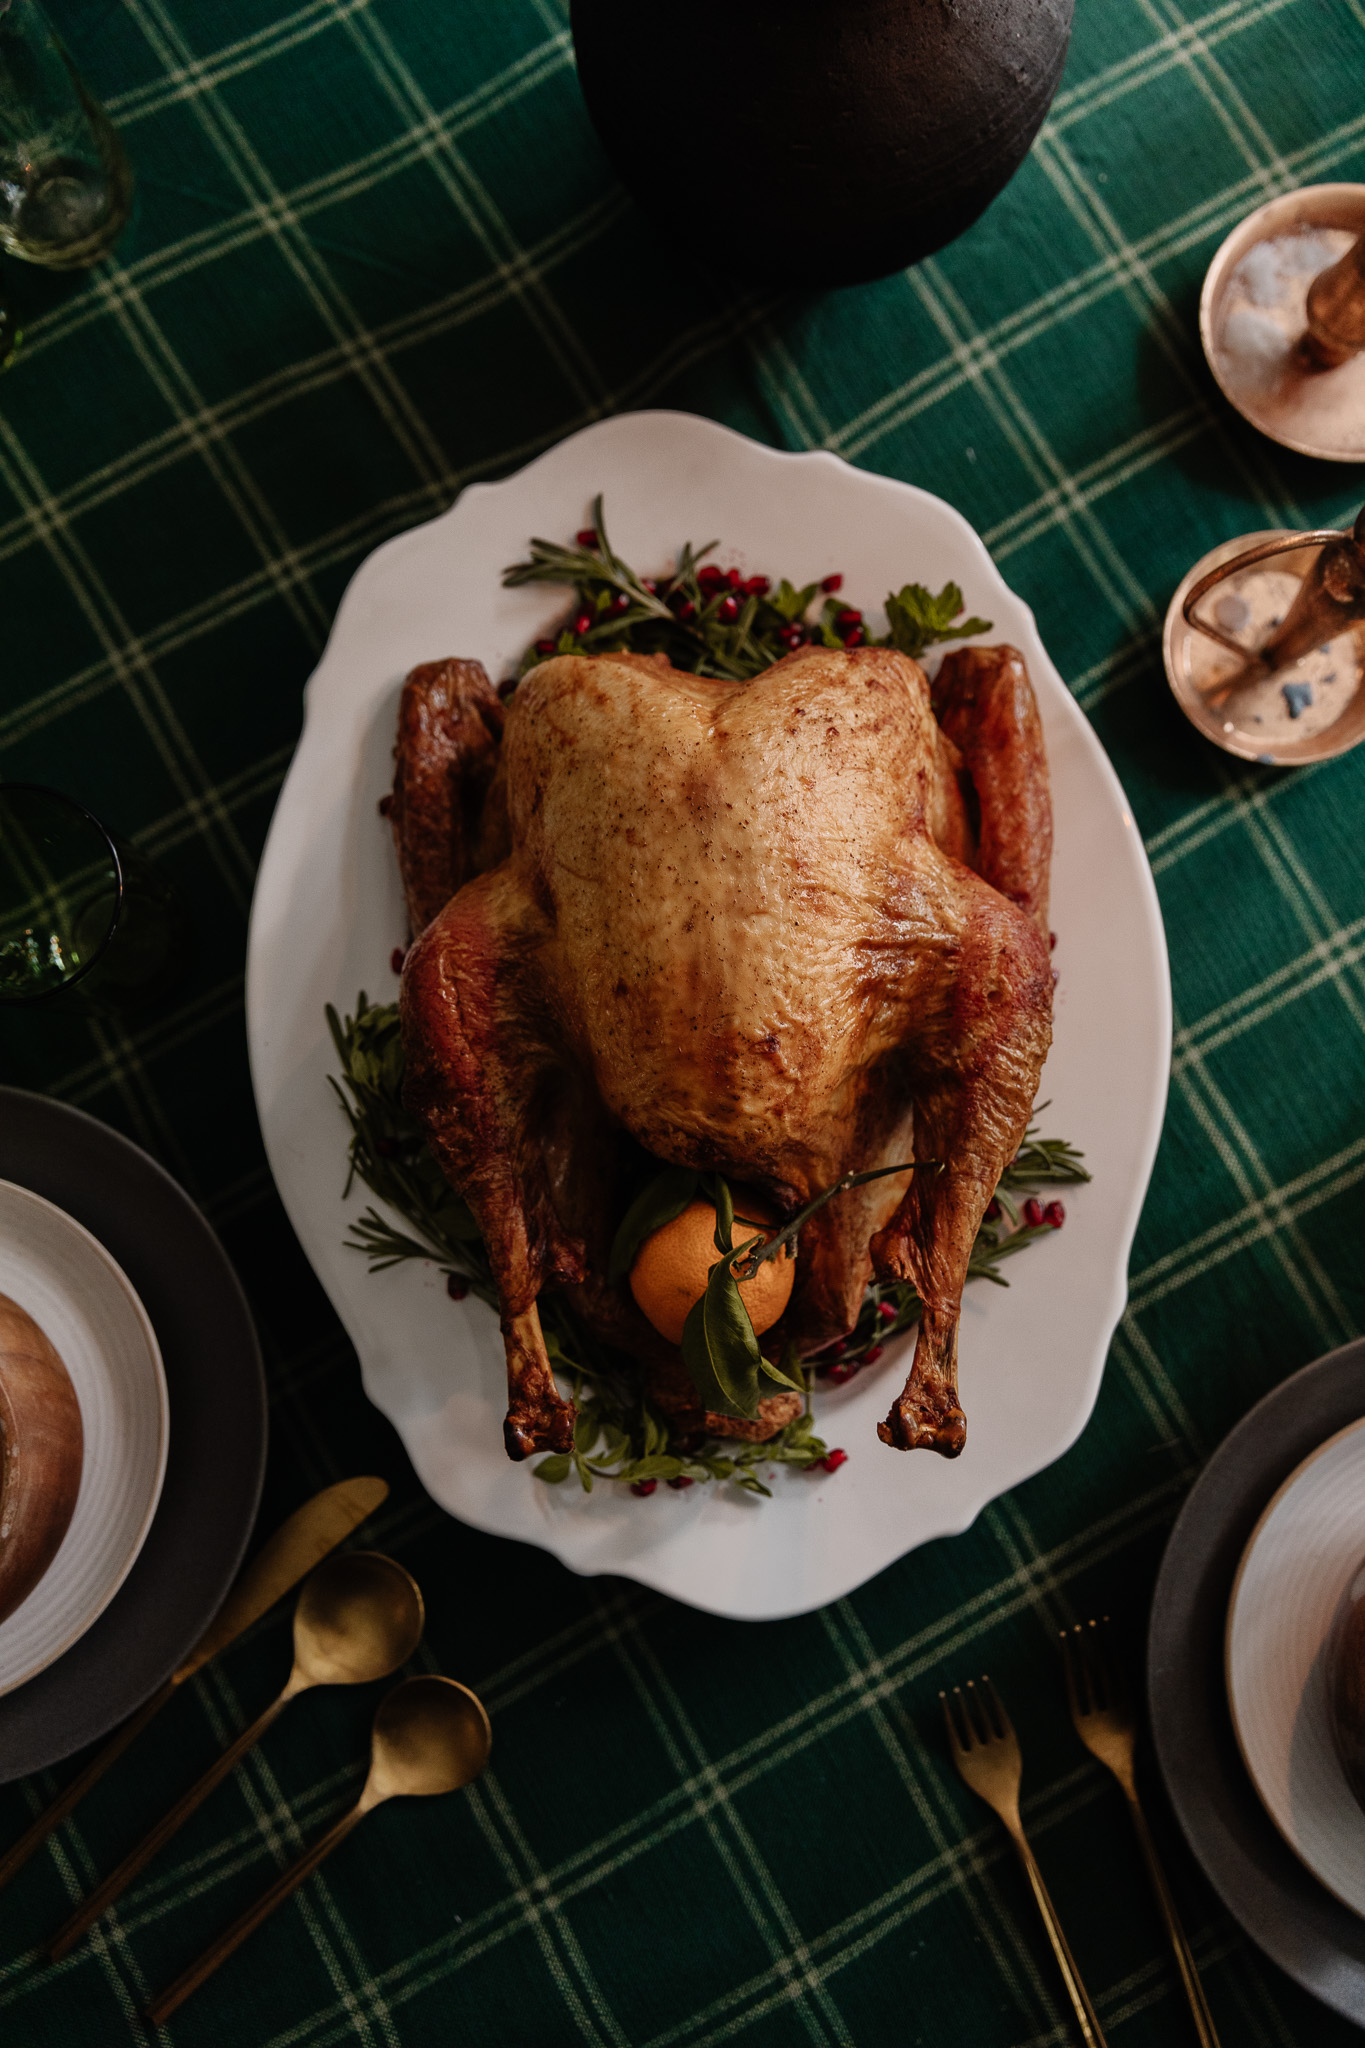 Thanksgiving Turkey in Wood Fired Cook Range - Baking Turkey in